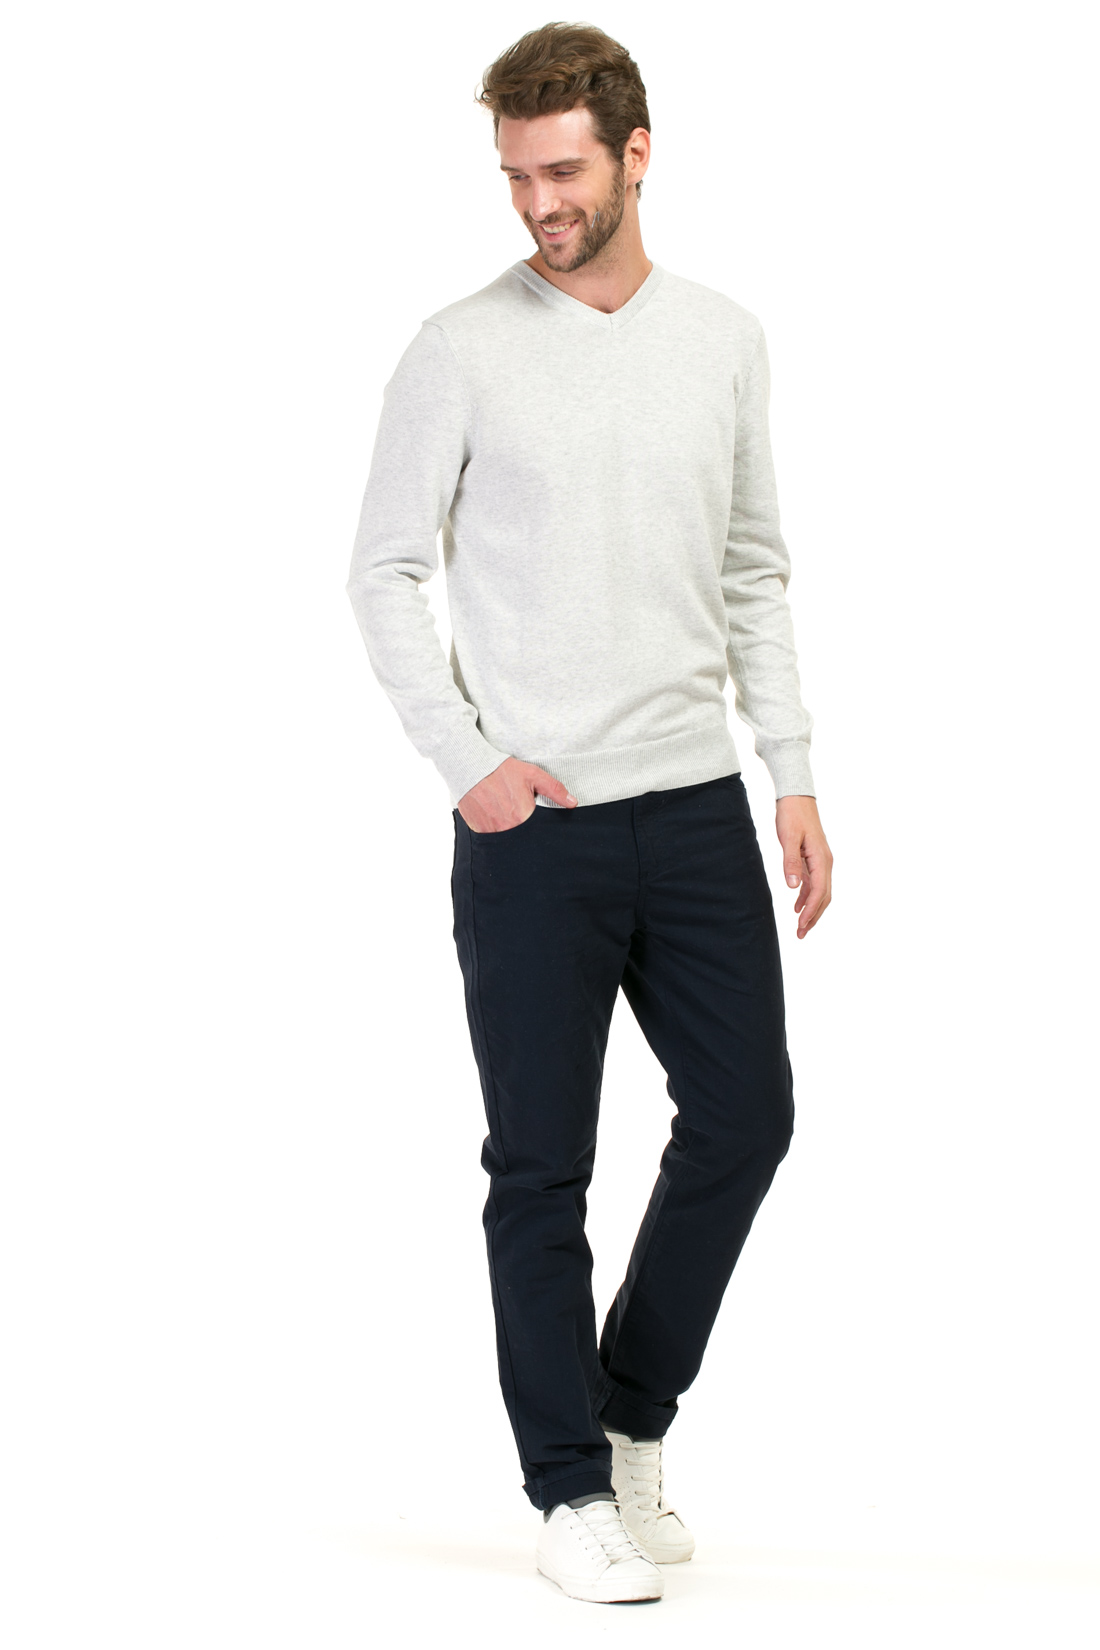 Базовый пуловер (арт. baon B637202), размер L, цвет light grey melange#серый Базовый пуловер (арт. baon B637202) - фото 5